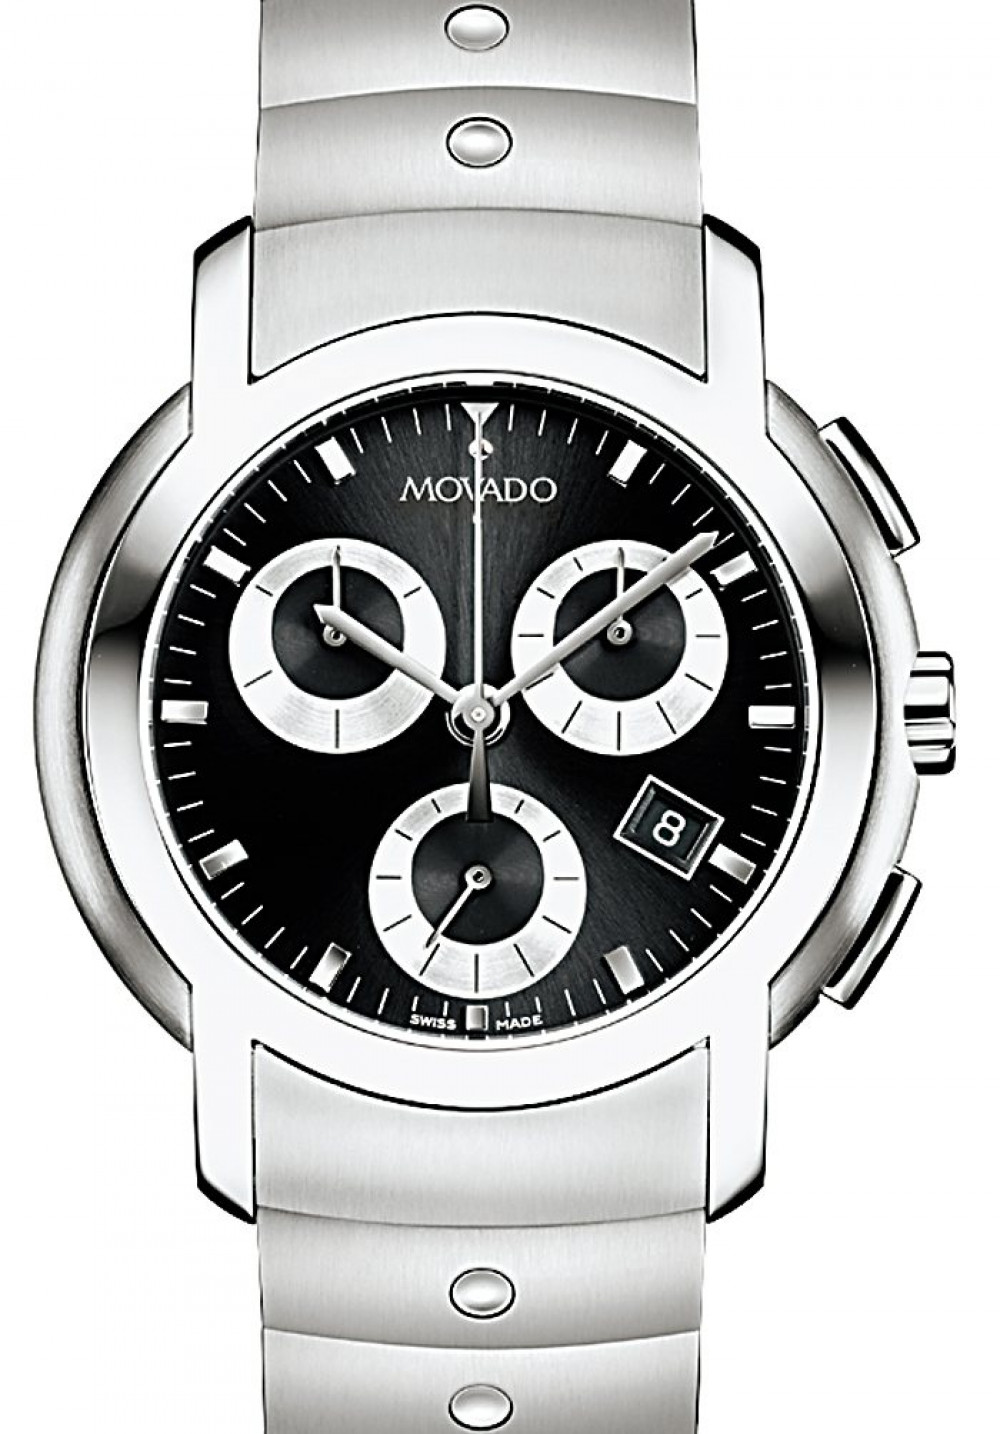 Zegarek firmy Movado, model SL Chrono